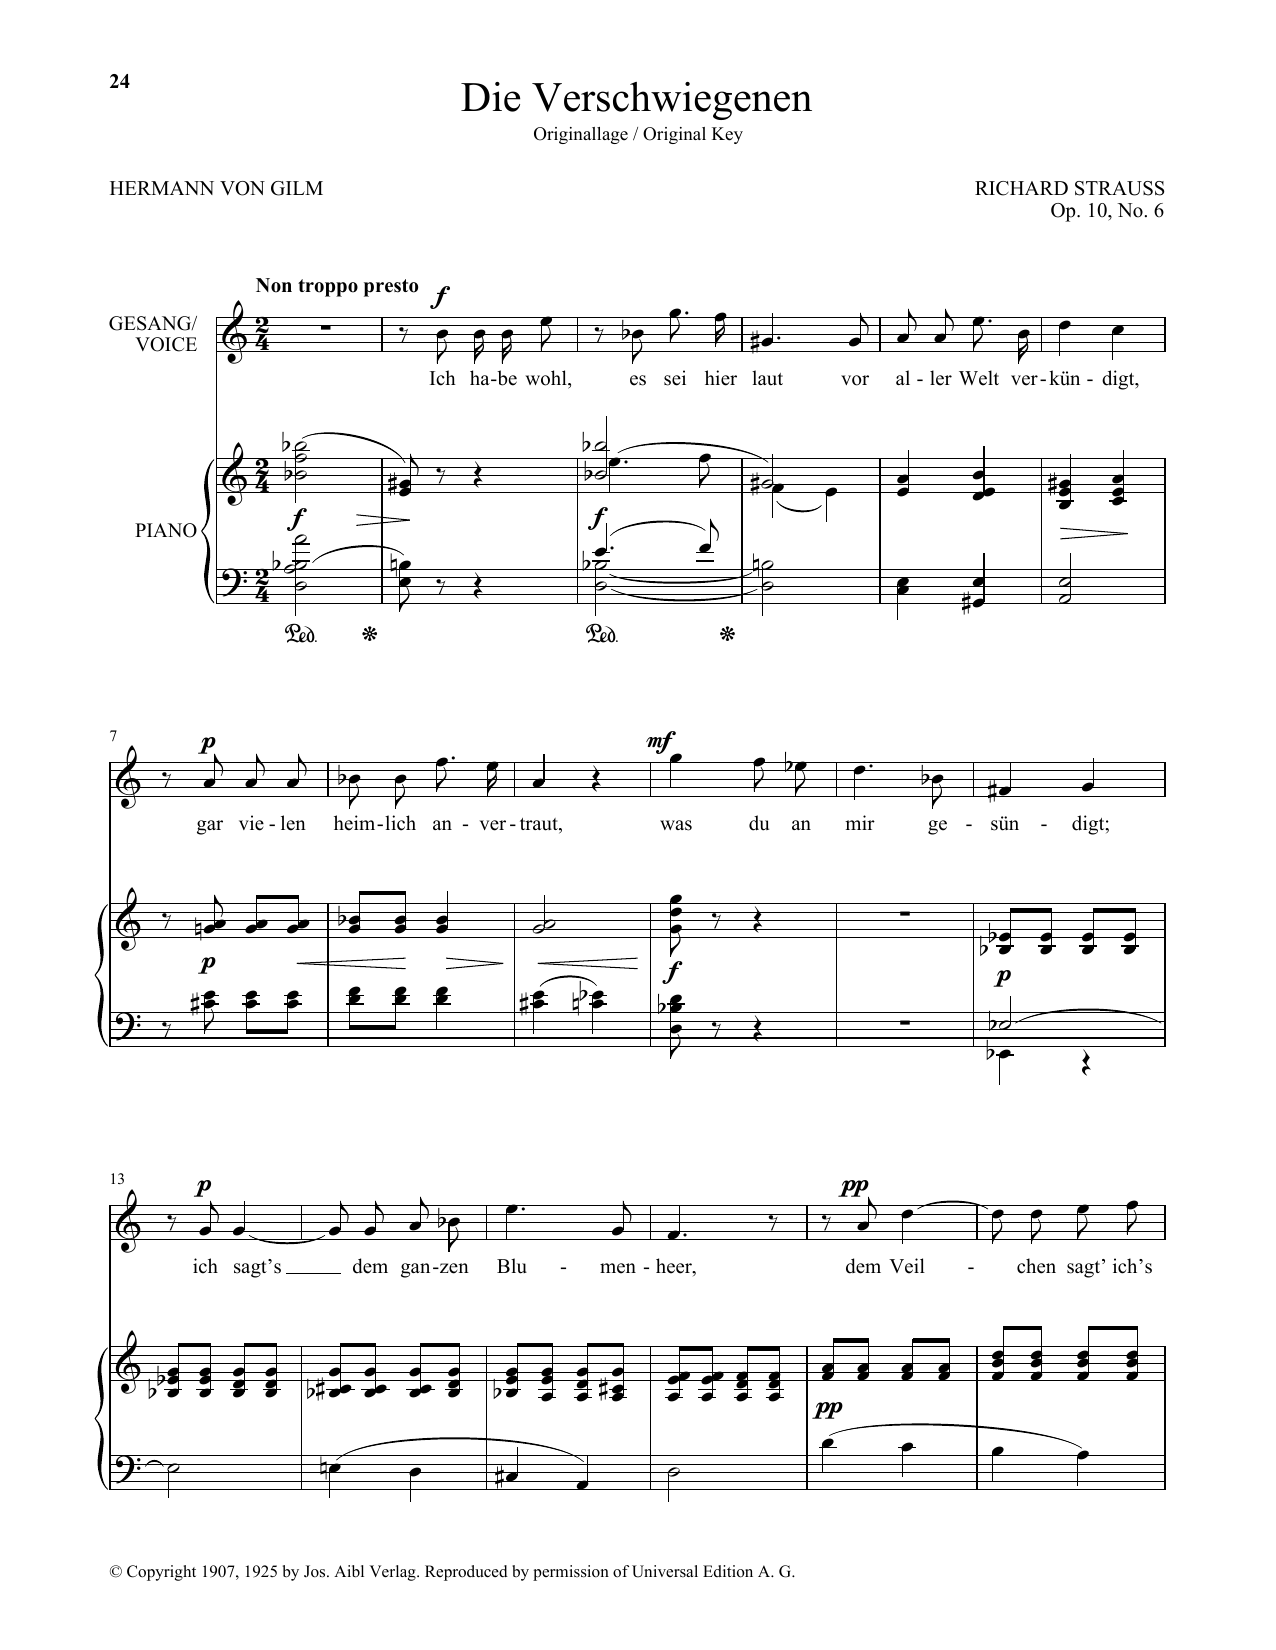 Richard Strauss Die Verschwiegenen (High Voice) Sheet Music Notes & Chords for Piano & Vocal - Download or Print PDF